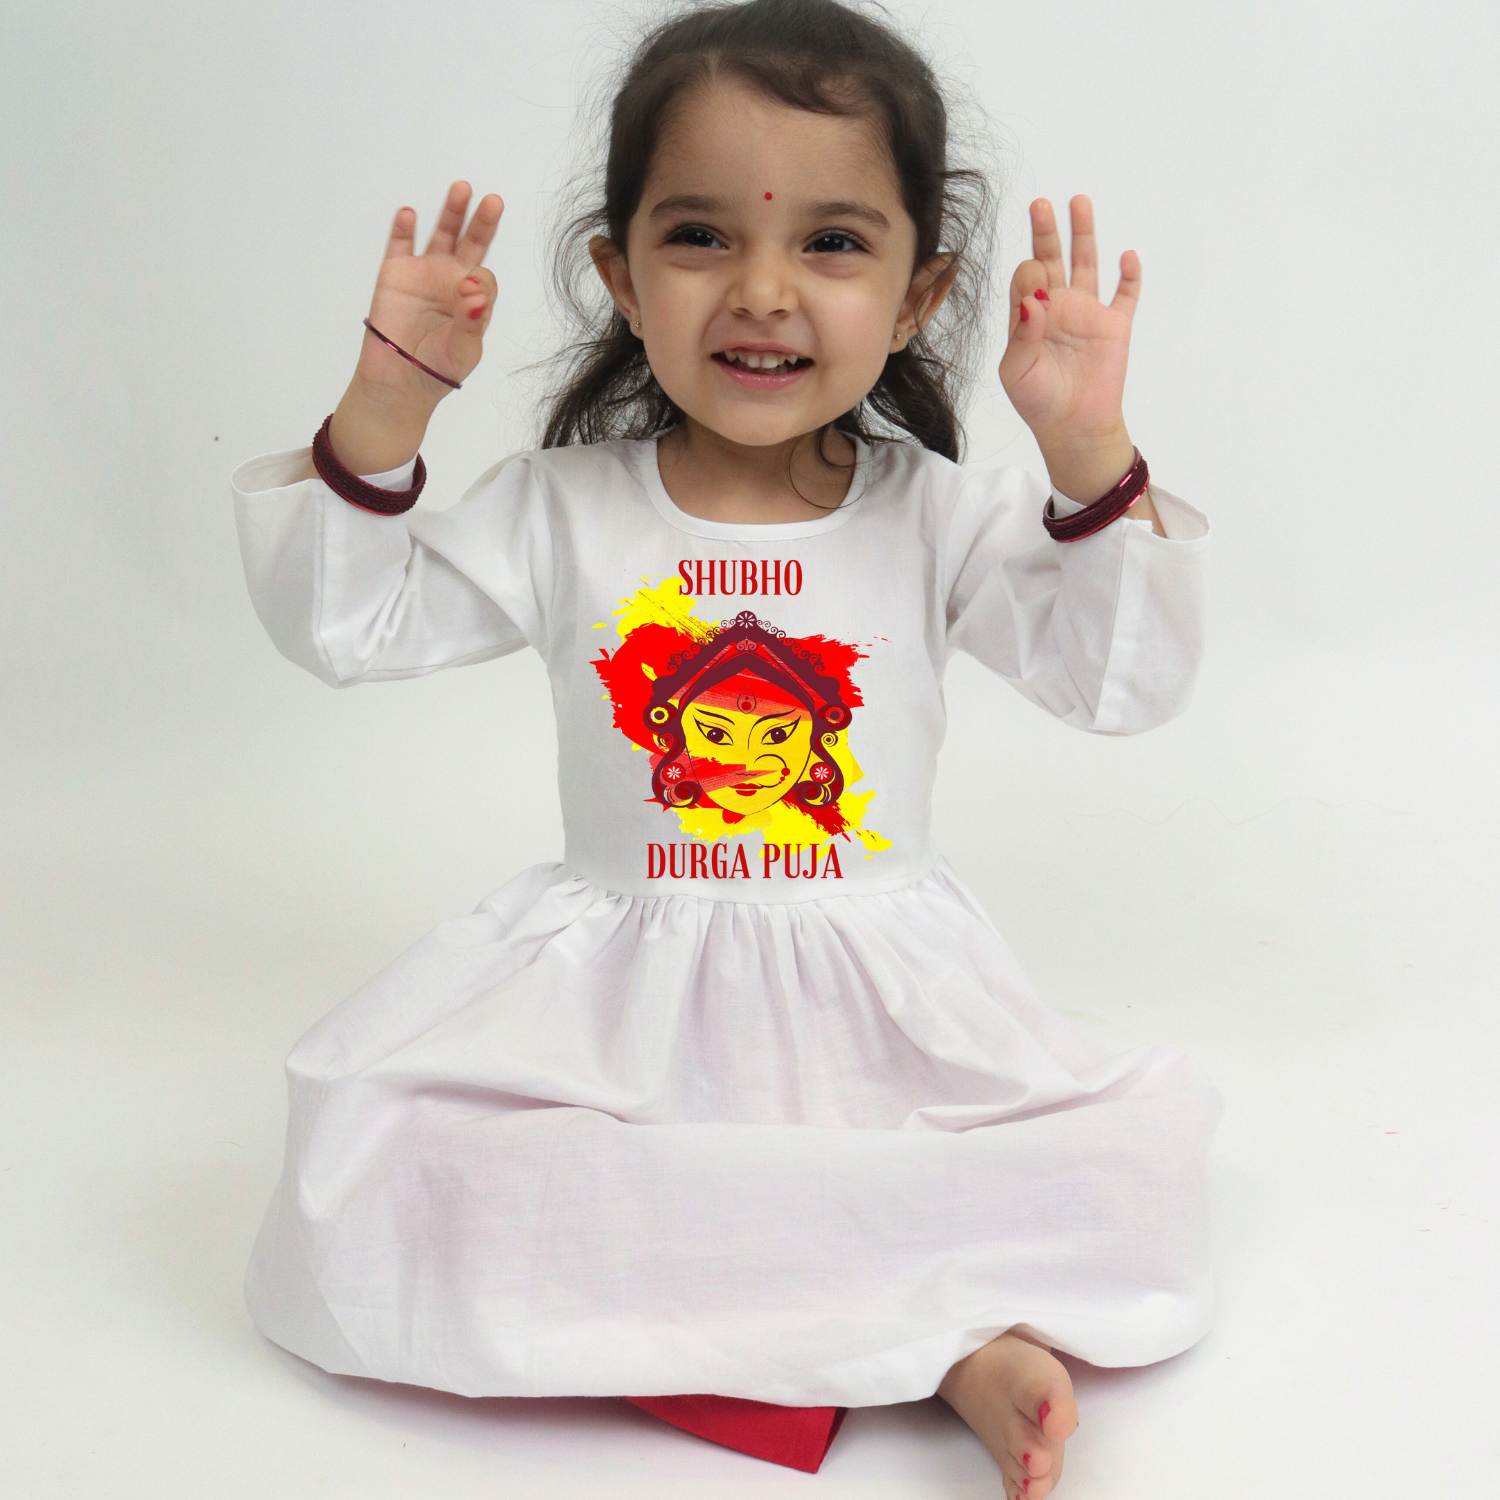 Shubho Durga Puja White Frock For Girls - KNITROOT